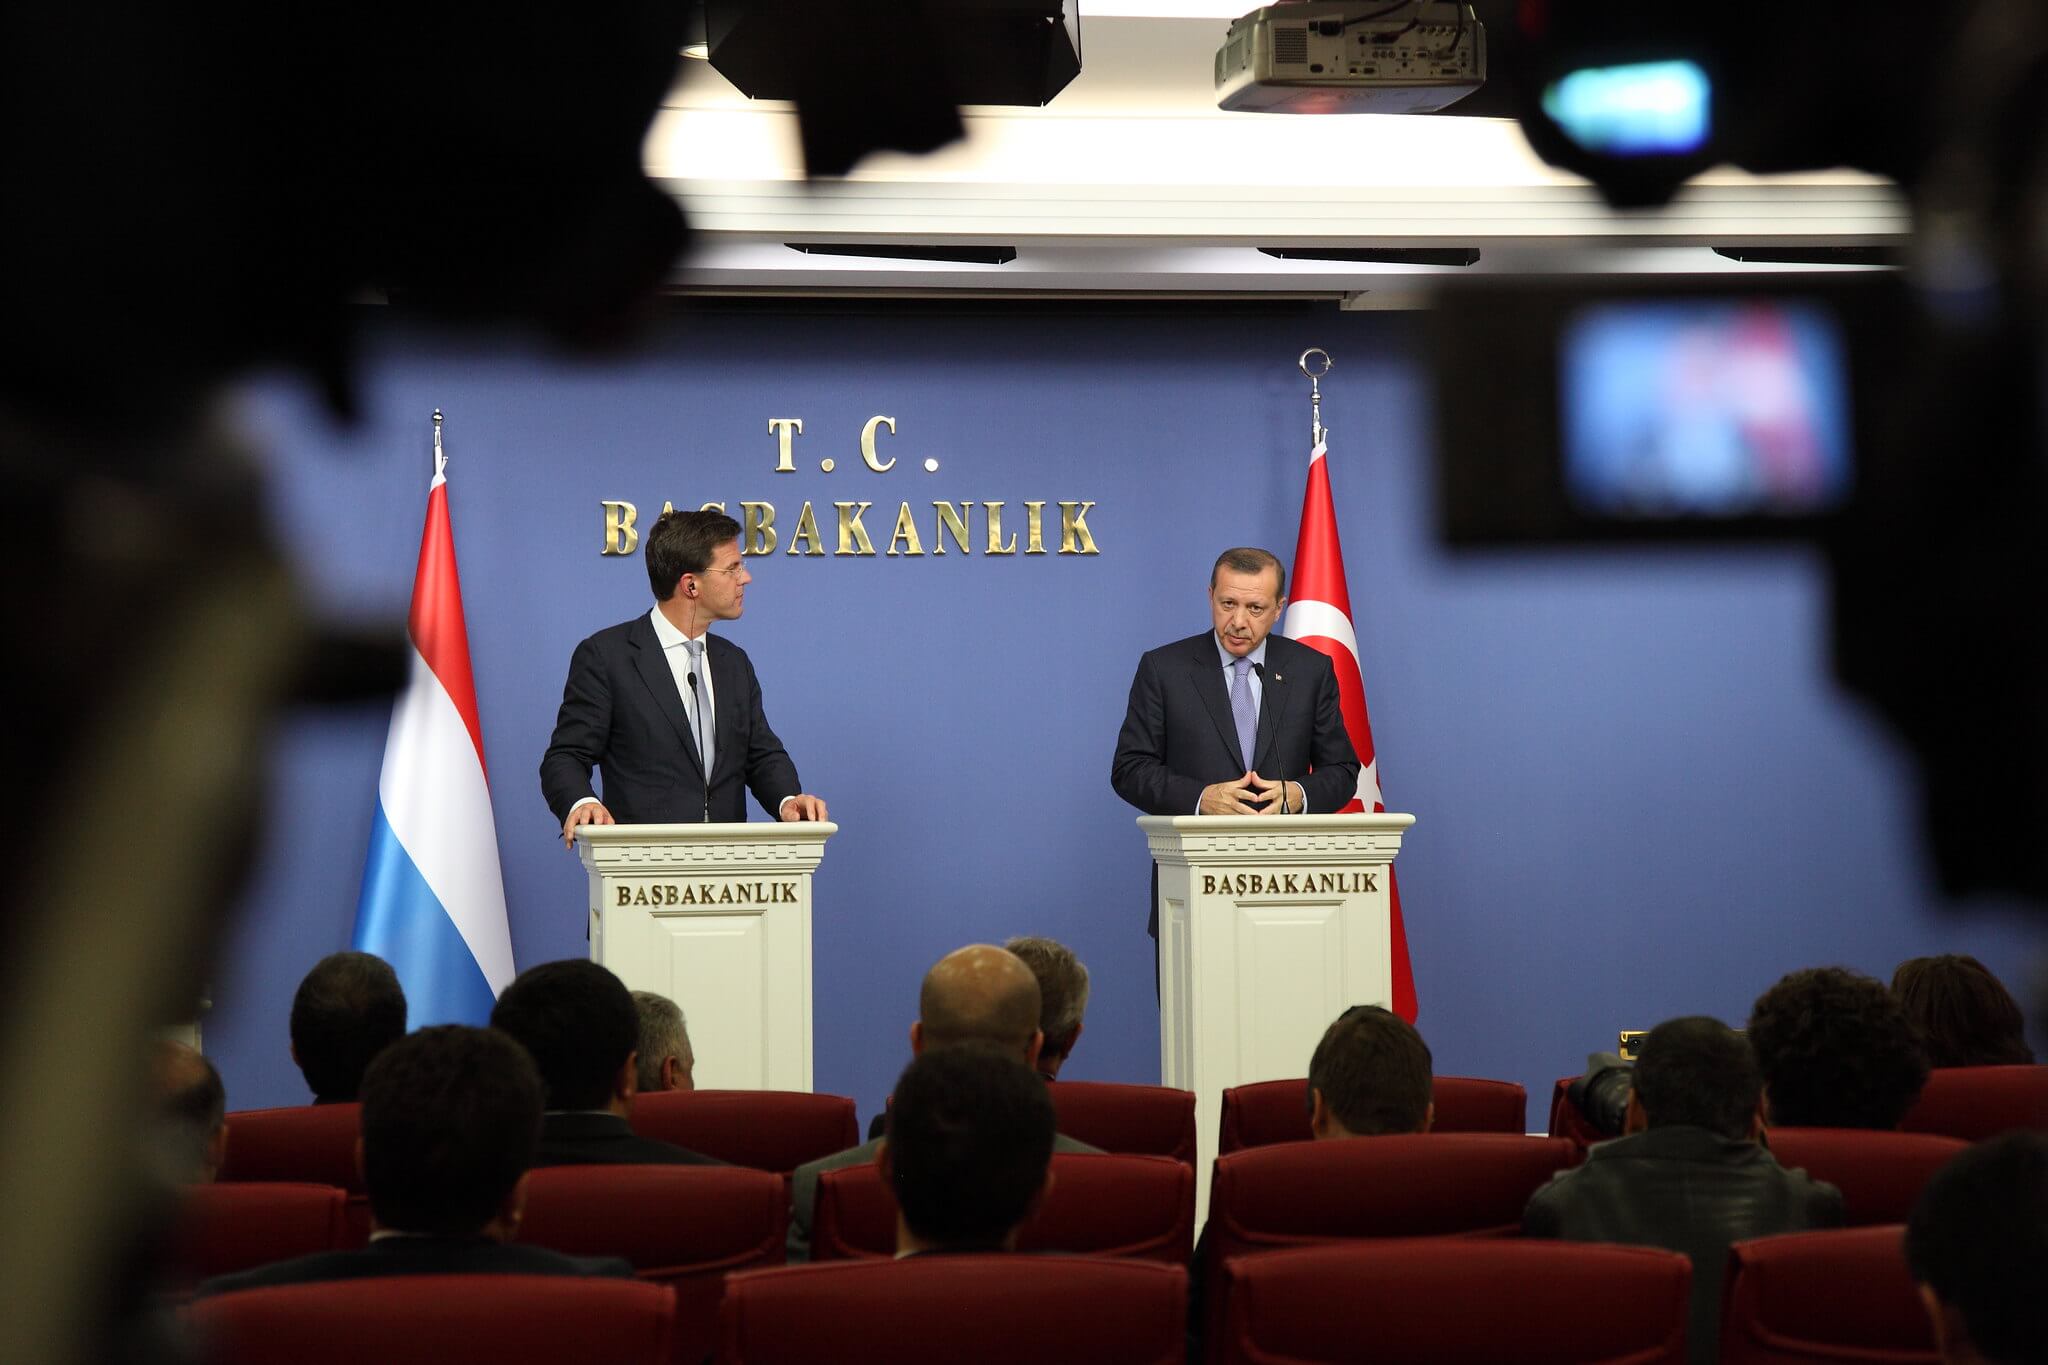 Drost - Minister-president Rutte en minister-president Erdoğan staan na afloop van een ontmoeting in 2012 de pers te woord. Minister-president Rutte - Flickr